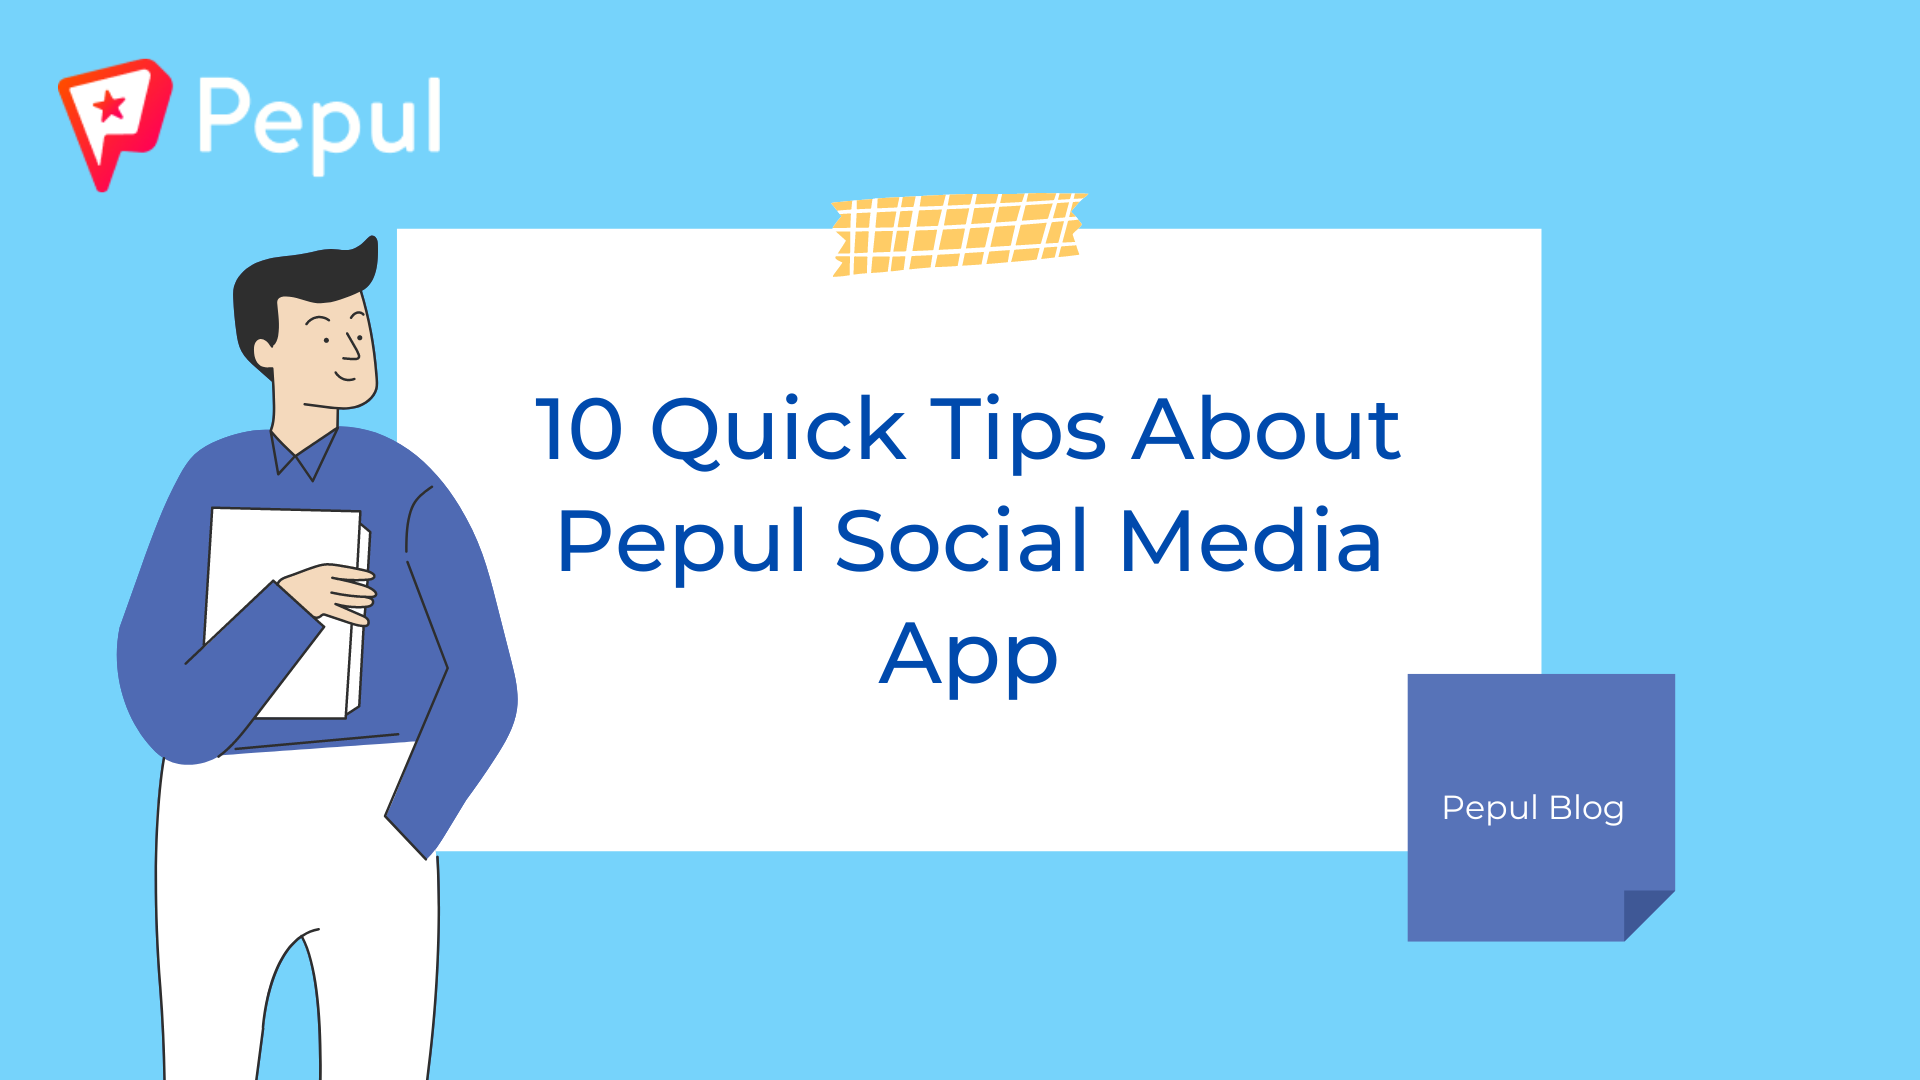 10 Quick Tips About Pepul Social Media App